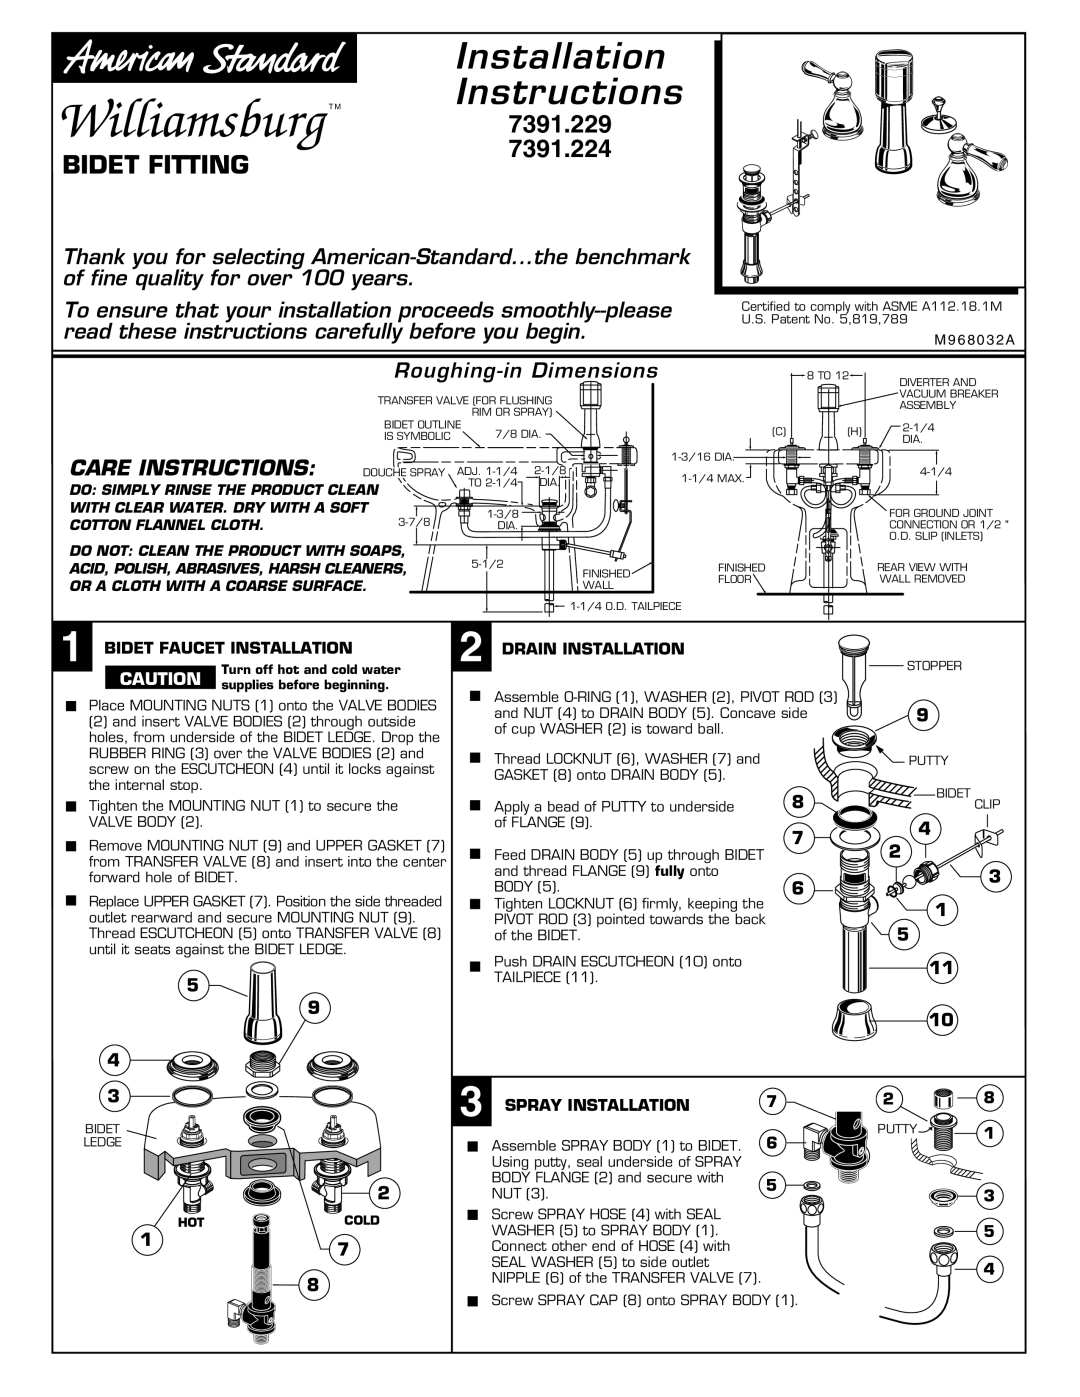 American Standard 7391.224 installation instructions Bidet Fitting, Williamsburg, Installation, Instructions, 7391.229 